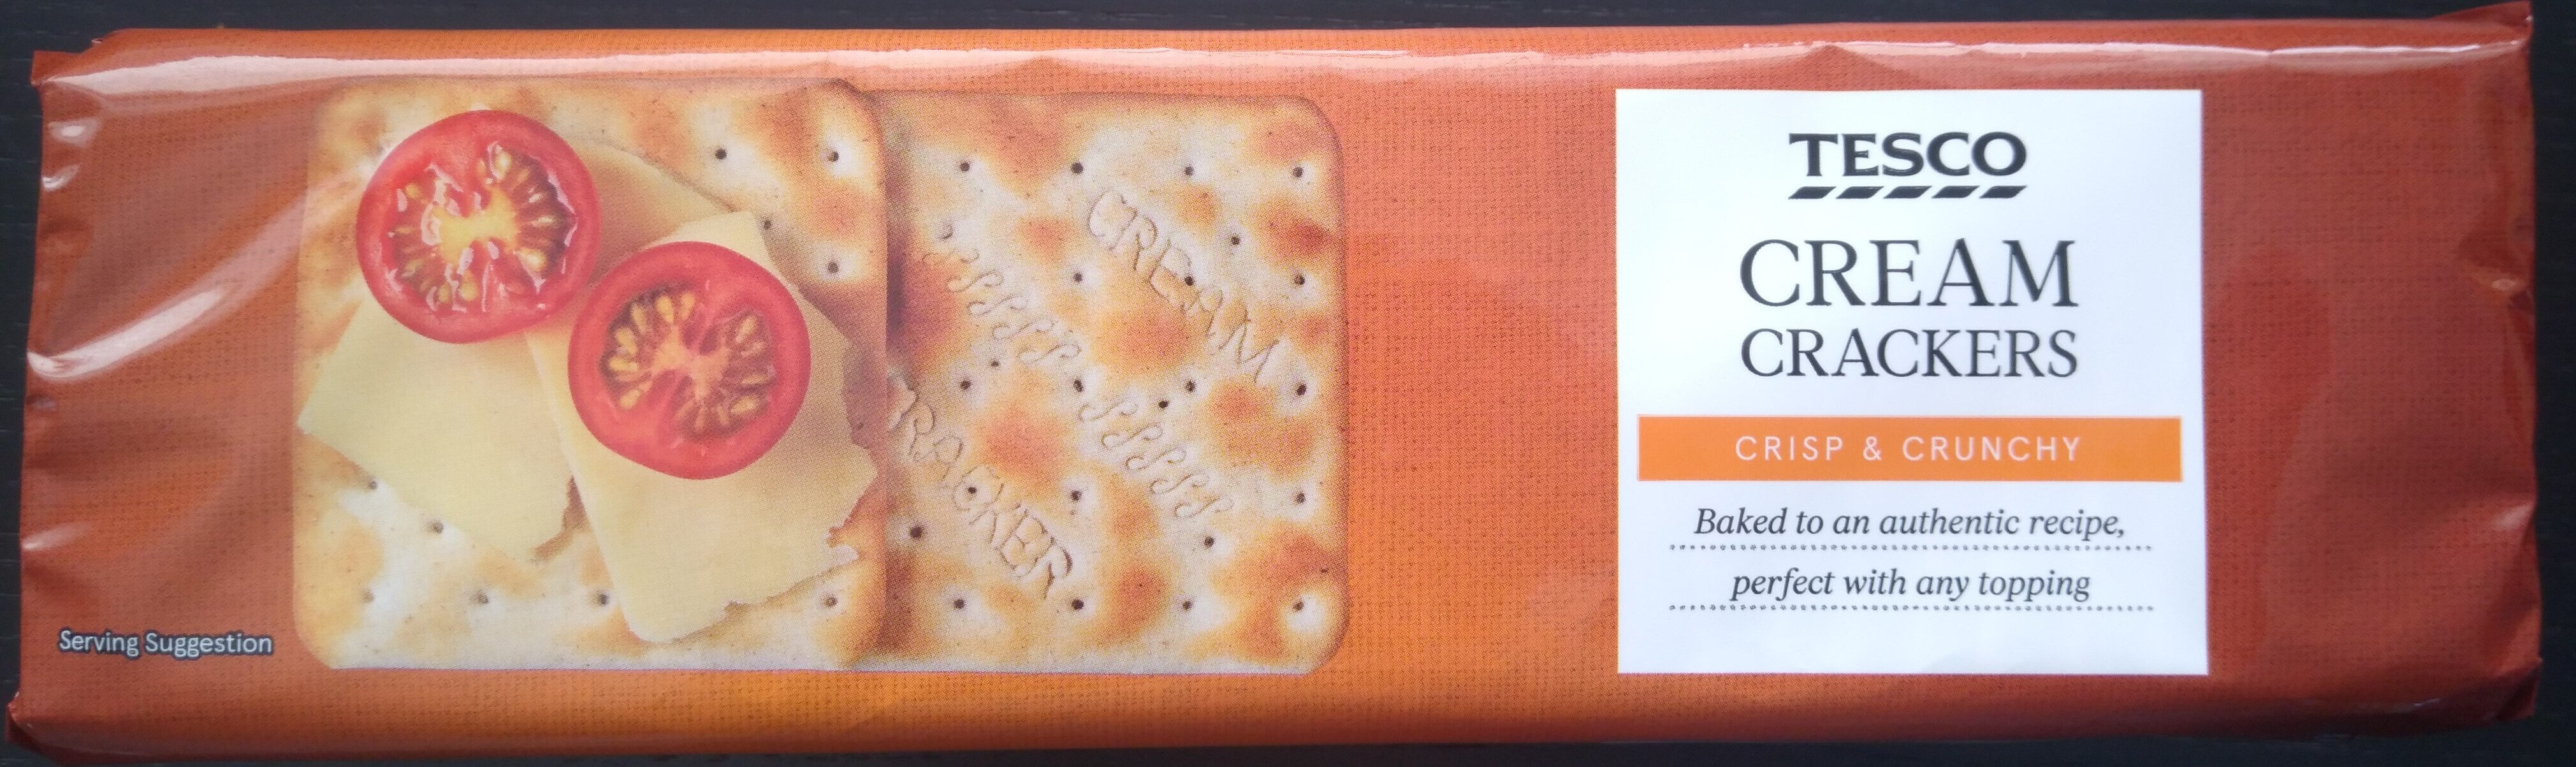 Cream crackers - Tesco - 300 g